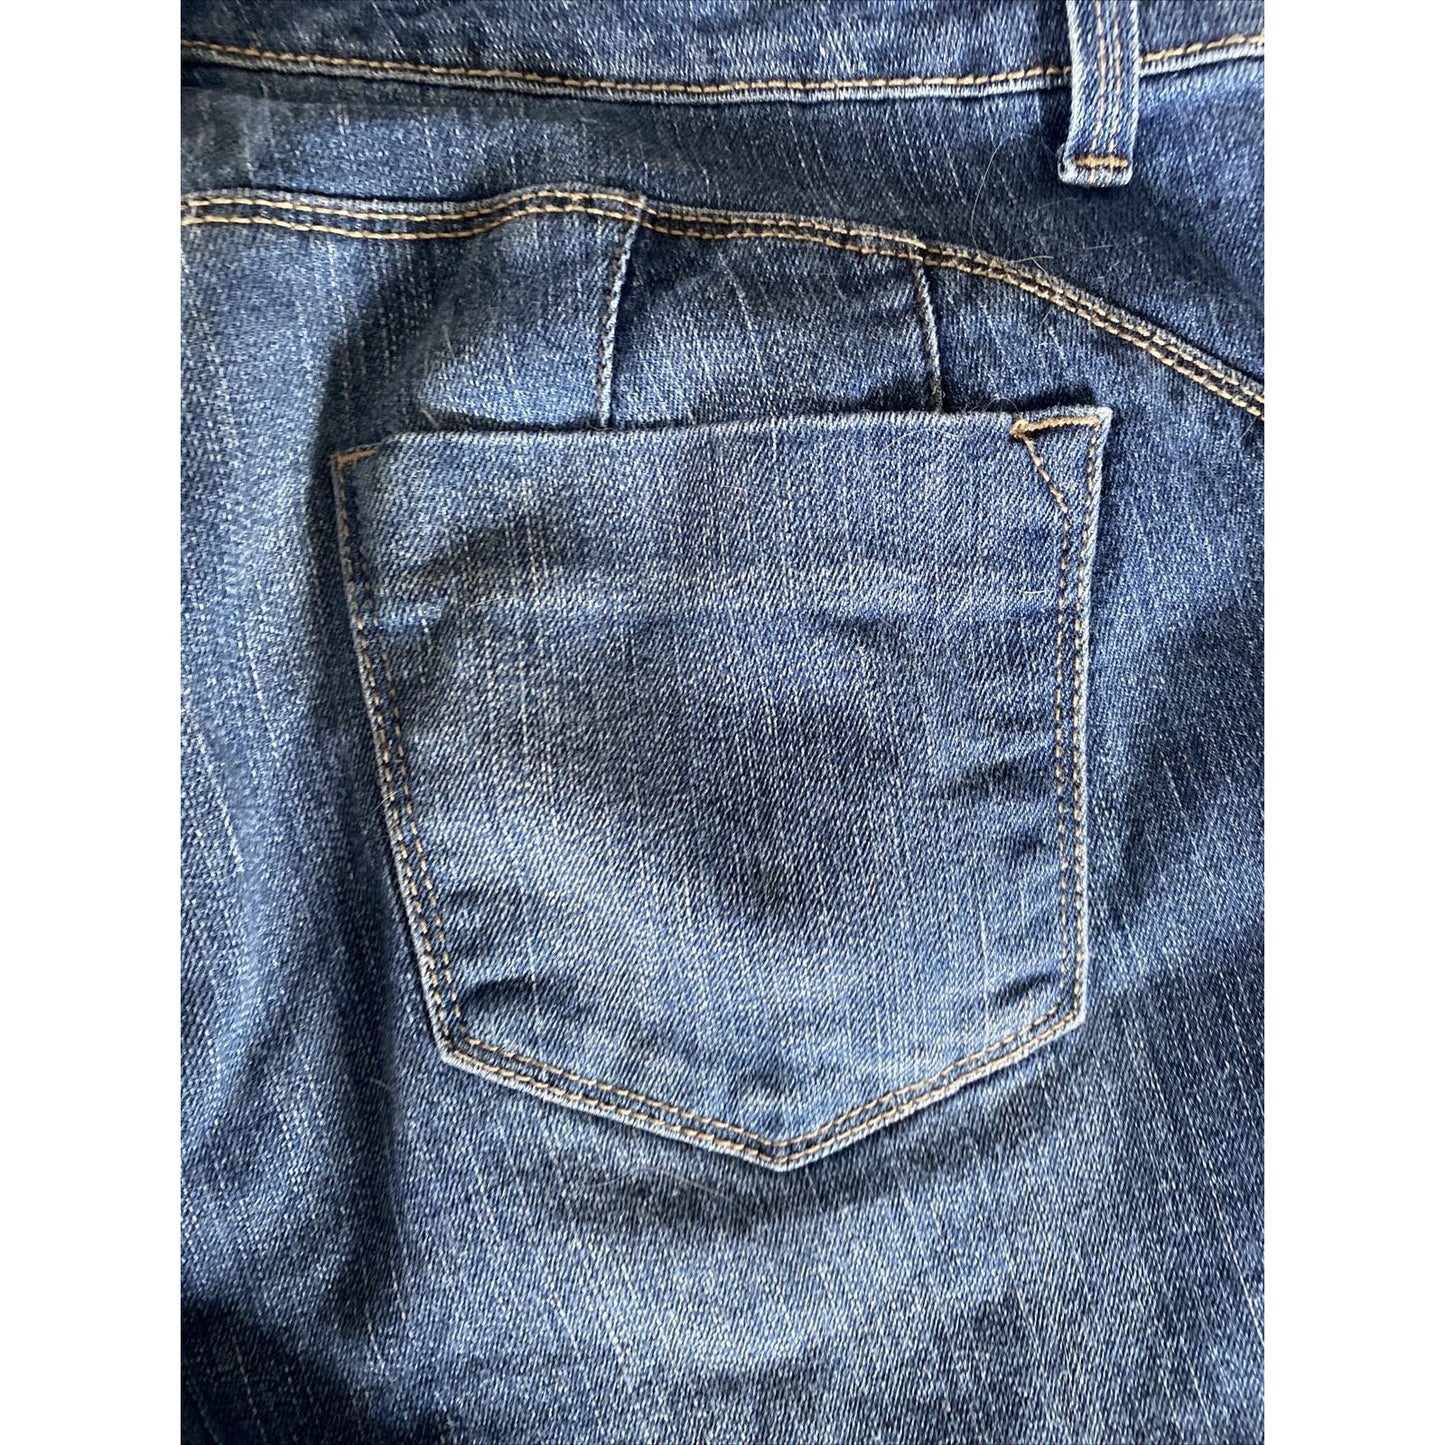 Nine West Women’s Size 12/30 Average Cotton Stretch Denim Capri Jeans